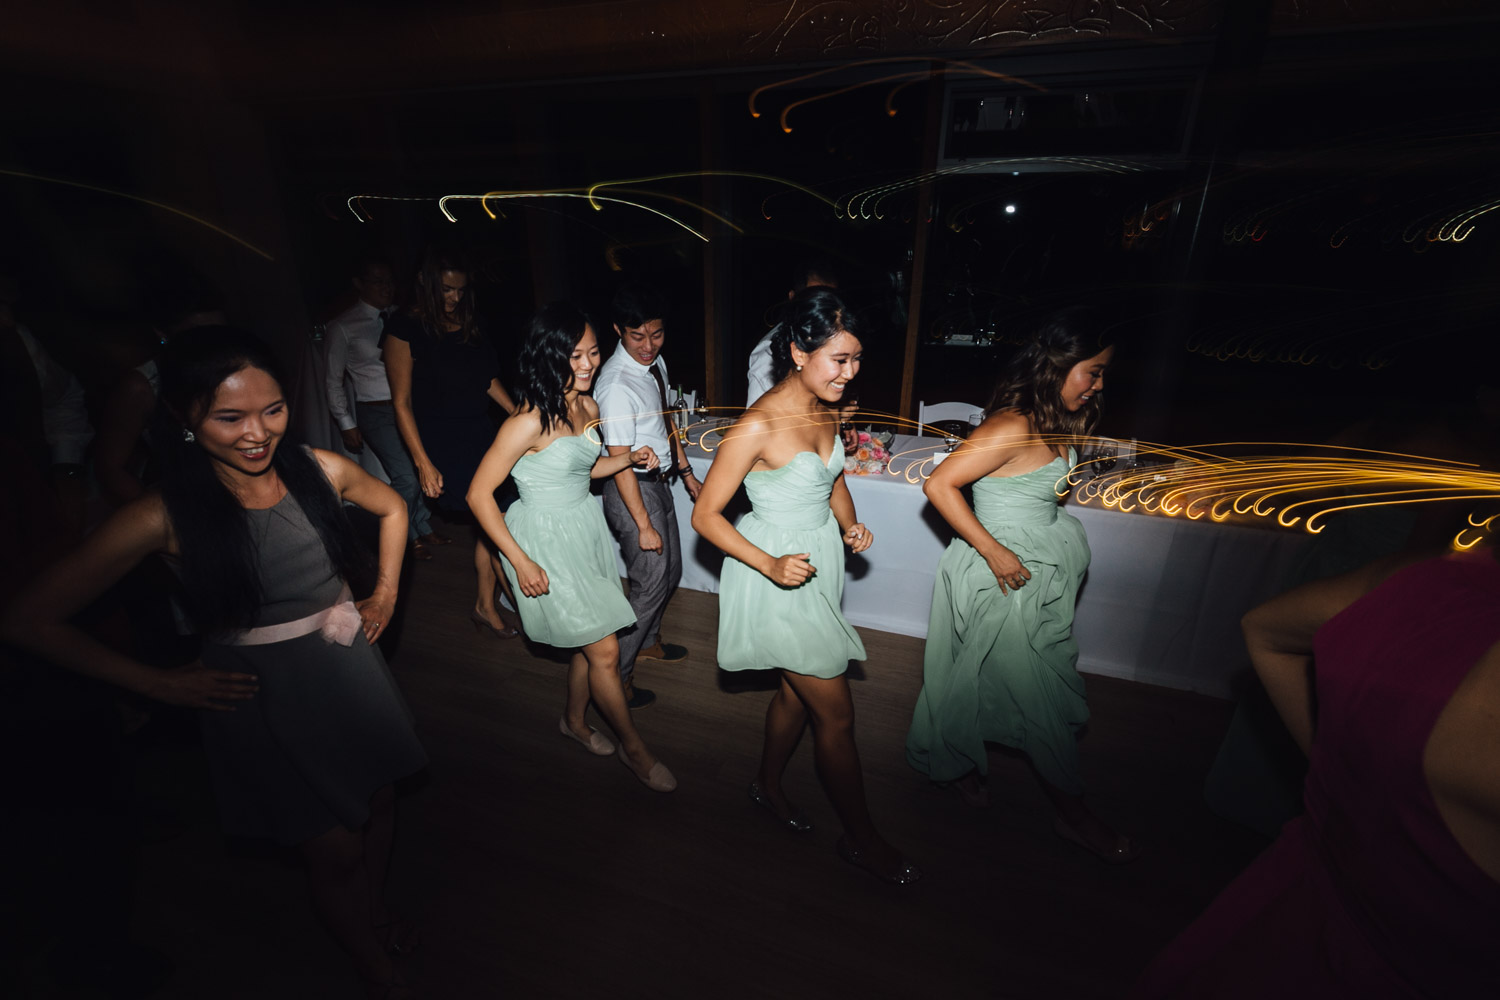 ubc boathouse wedding reception richmond bc photography dancing